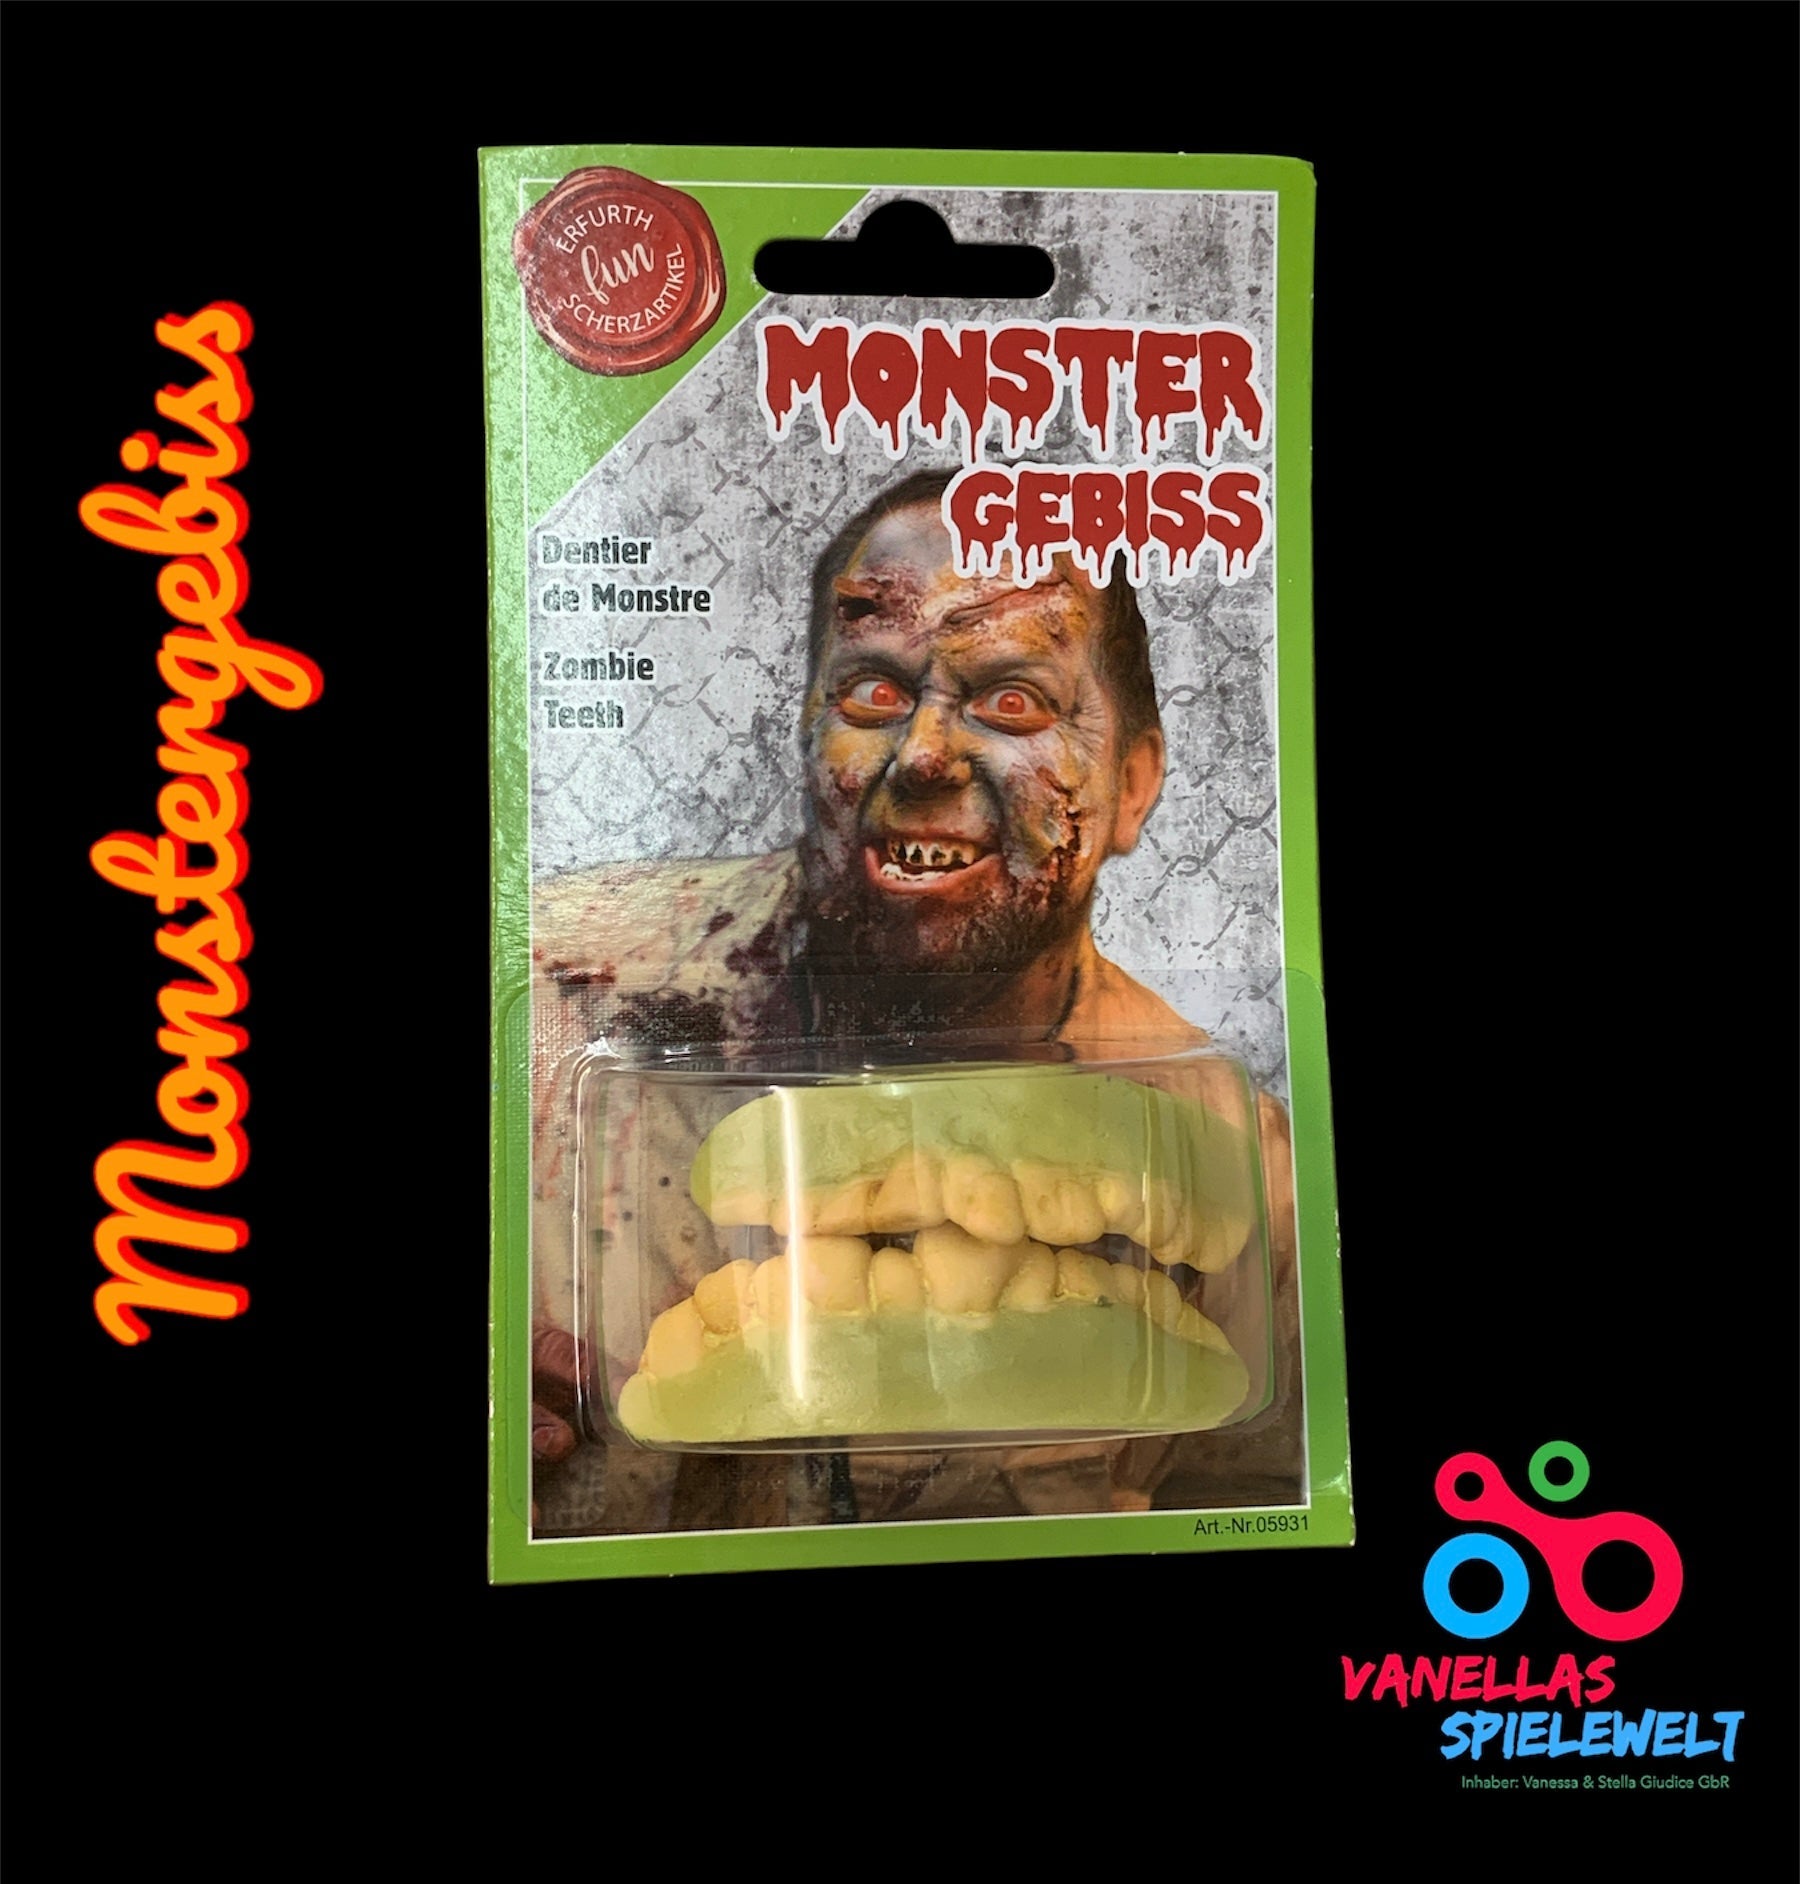 Monstergebiss - Halloween Vanellas Spielewelt